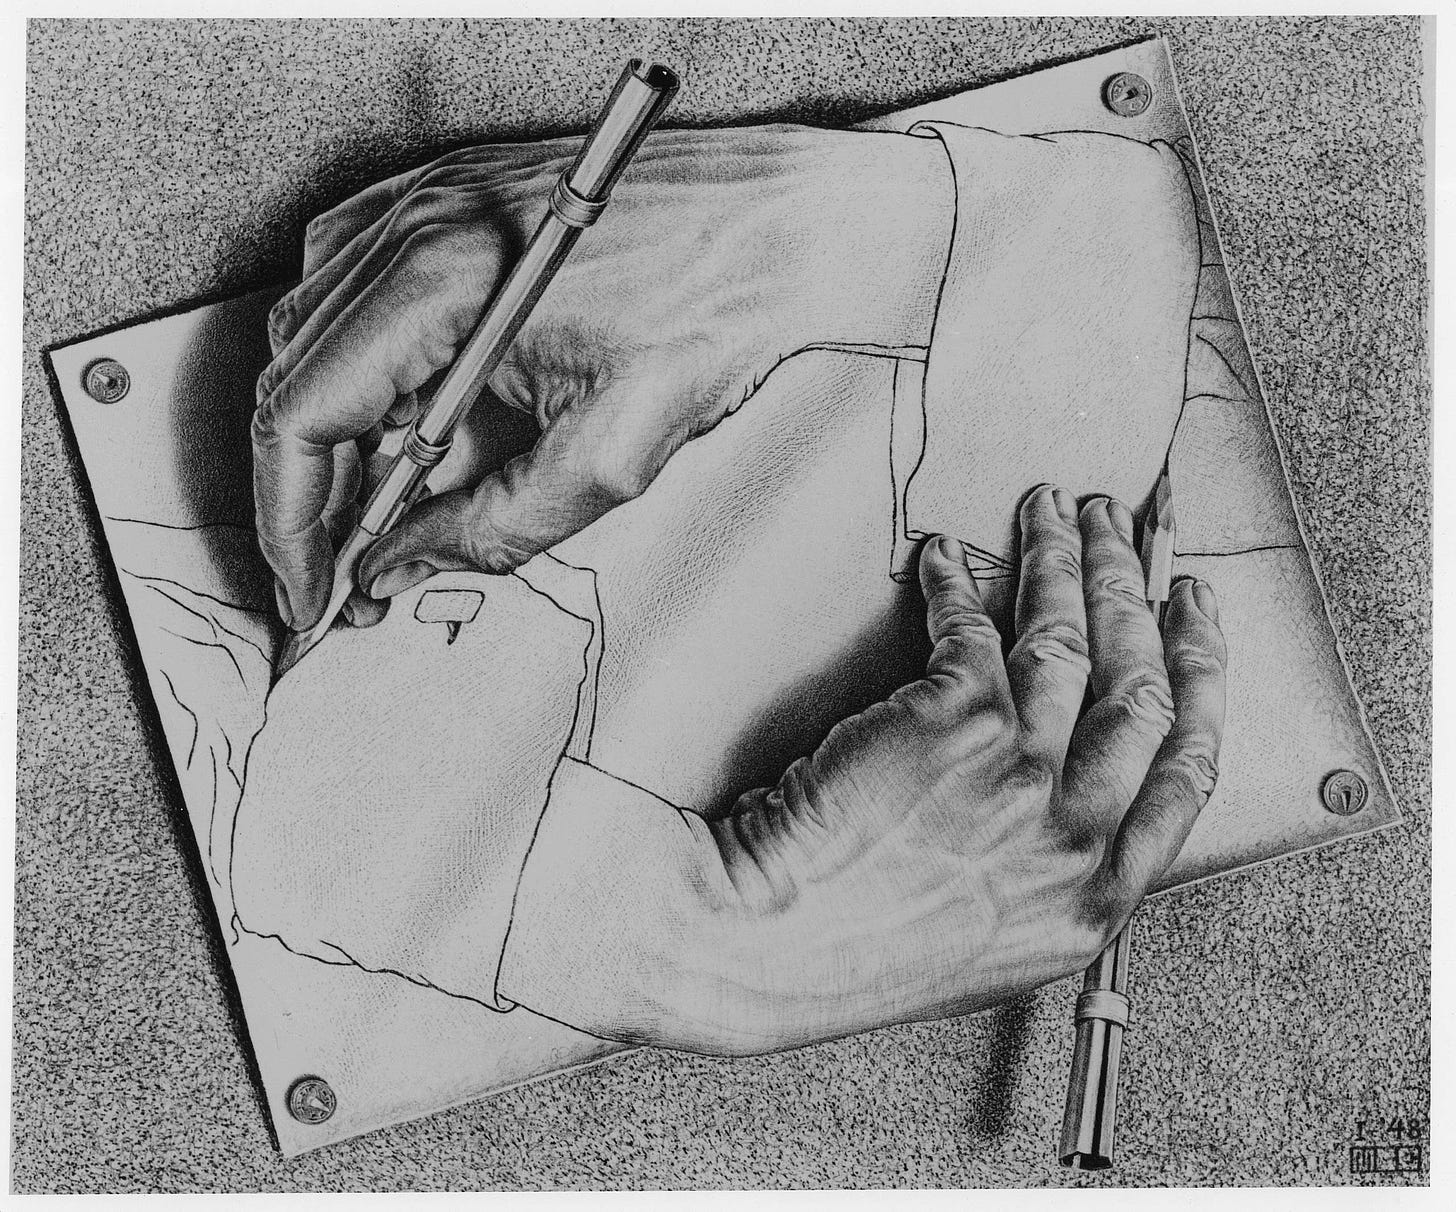 M.C. Escher's “Drawing Hands” – BYU Museum of Art